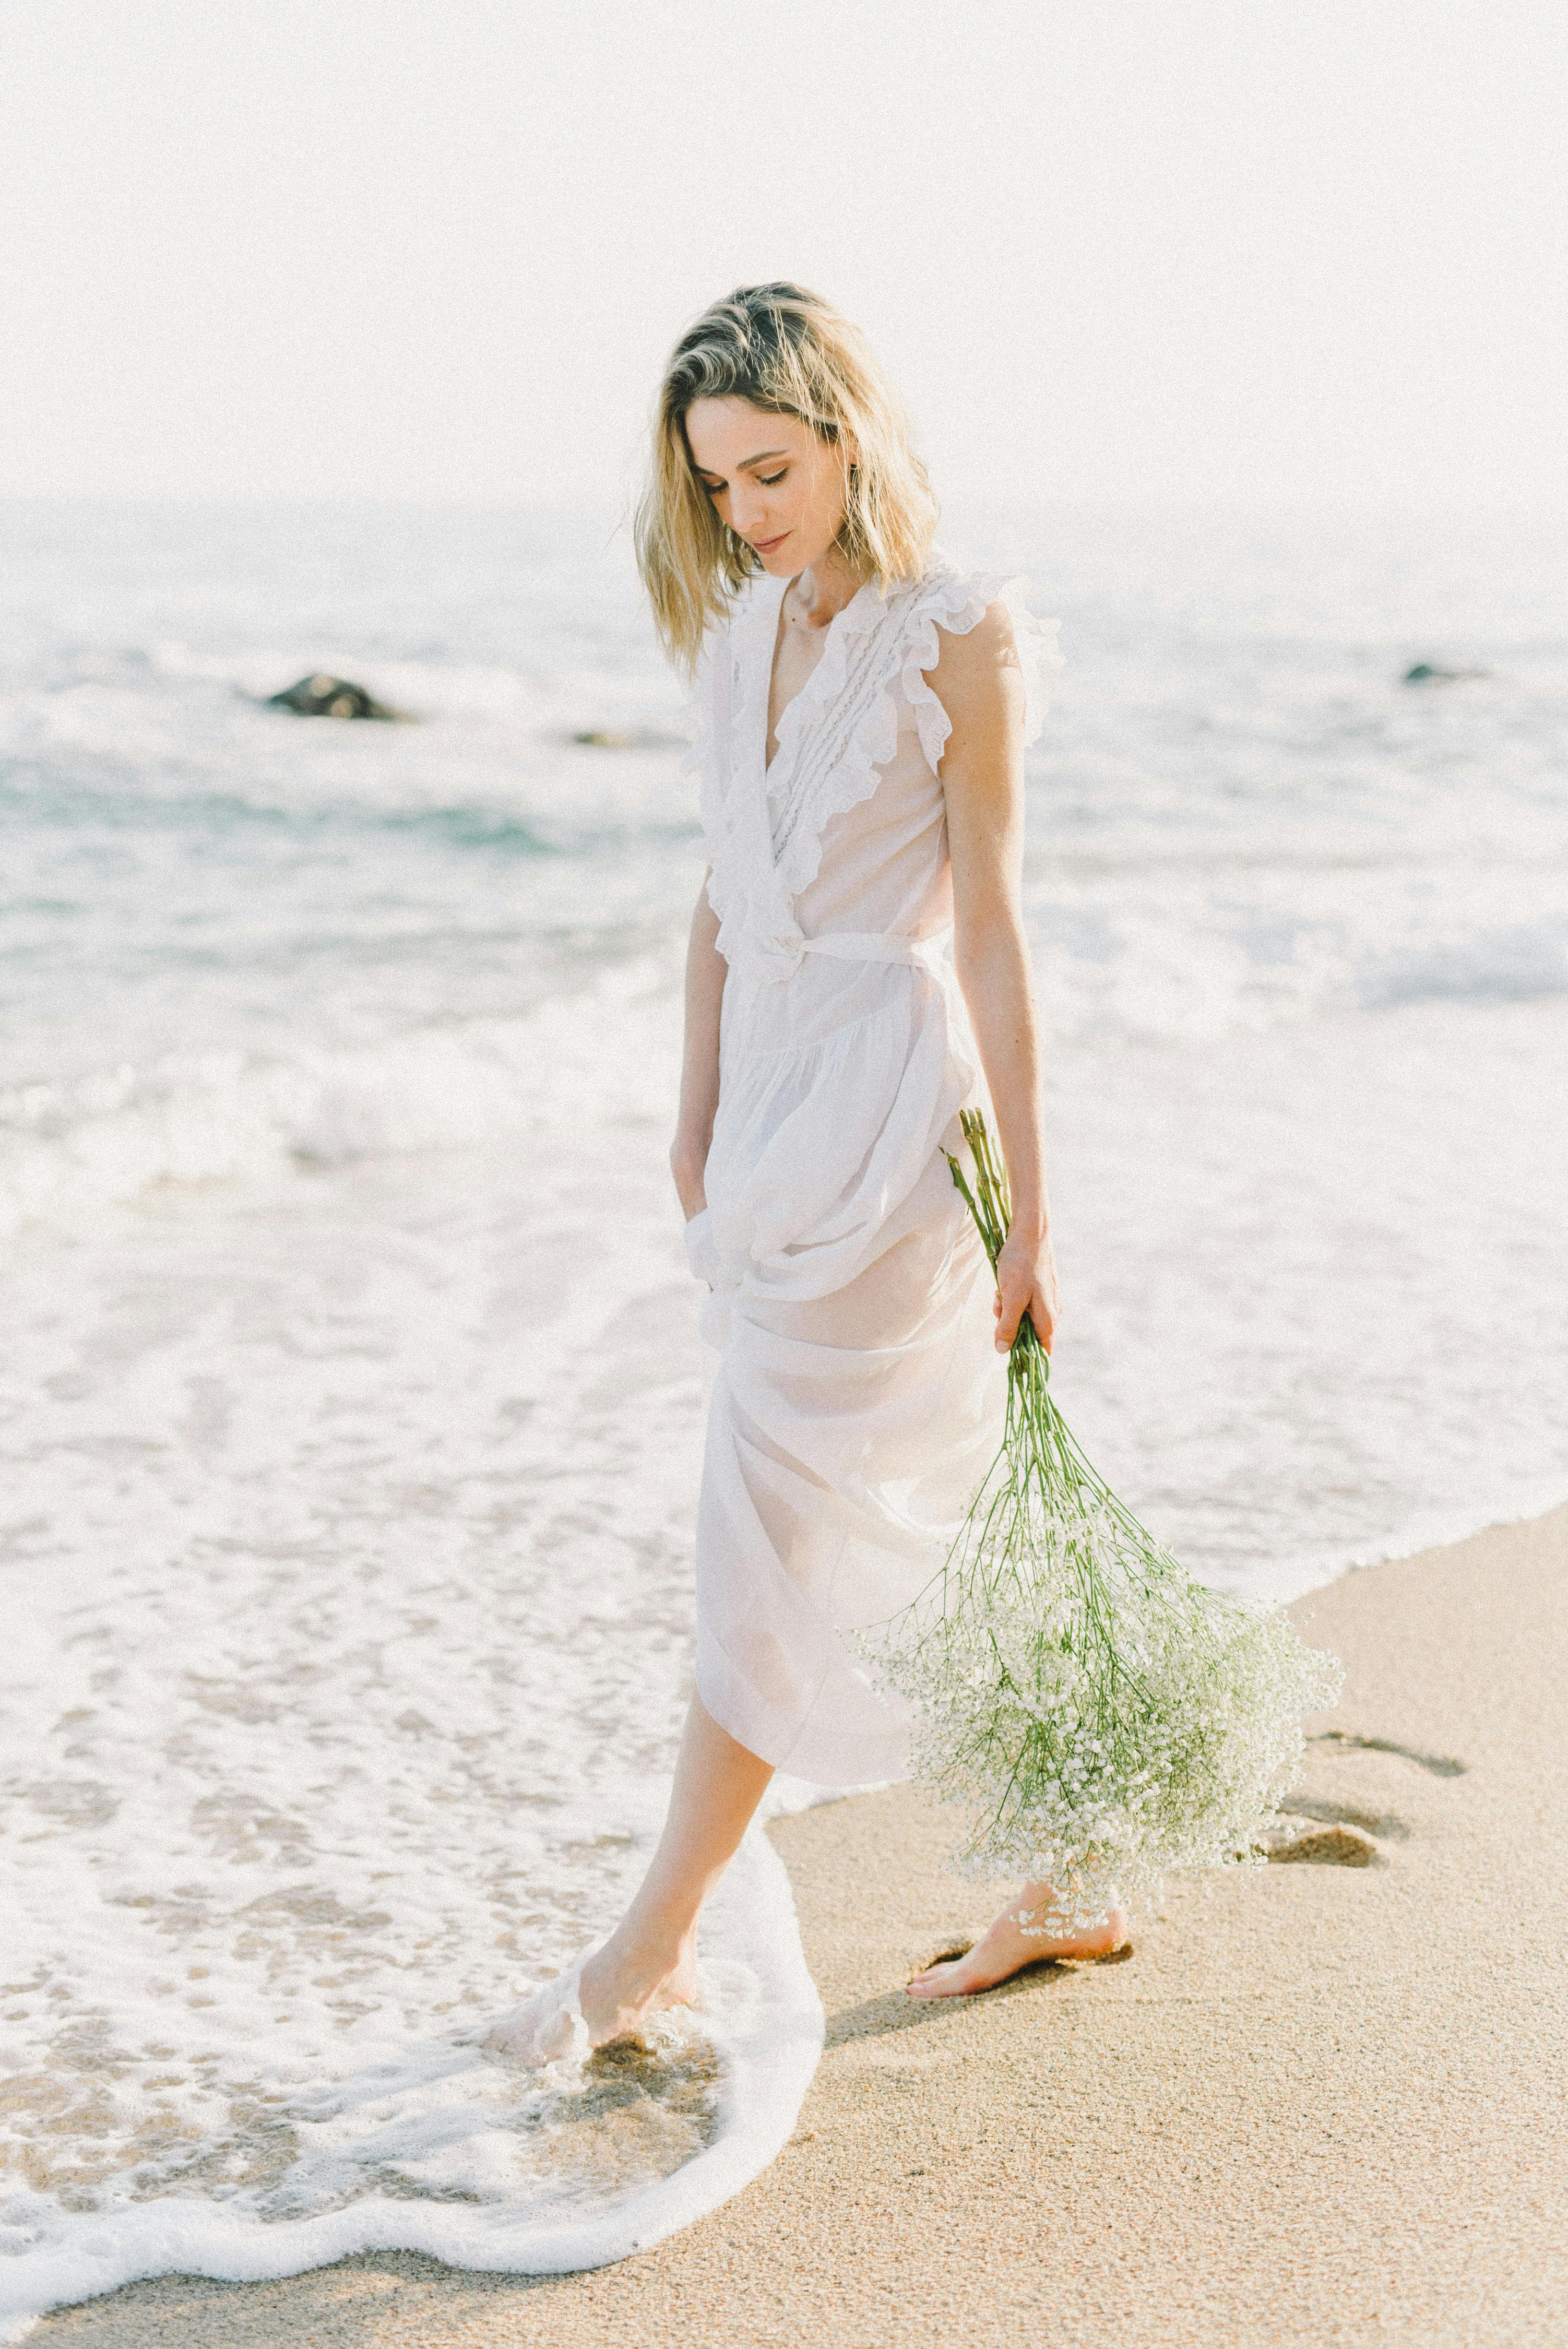 a woman in a white dress walking on beach